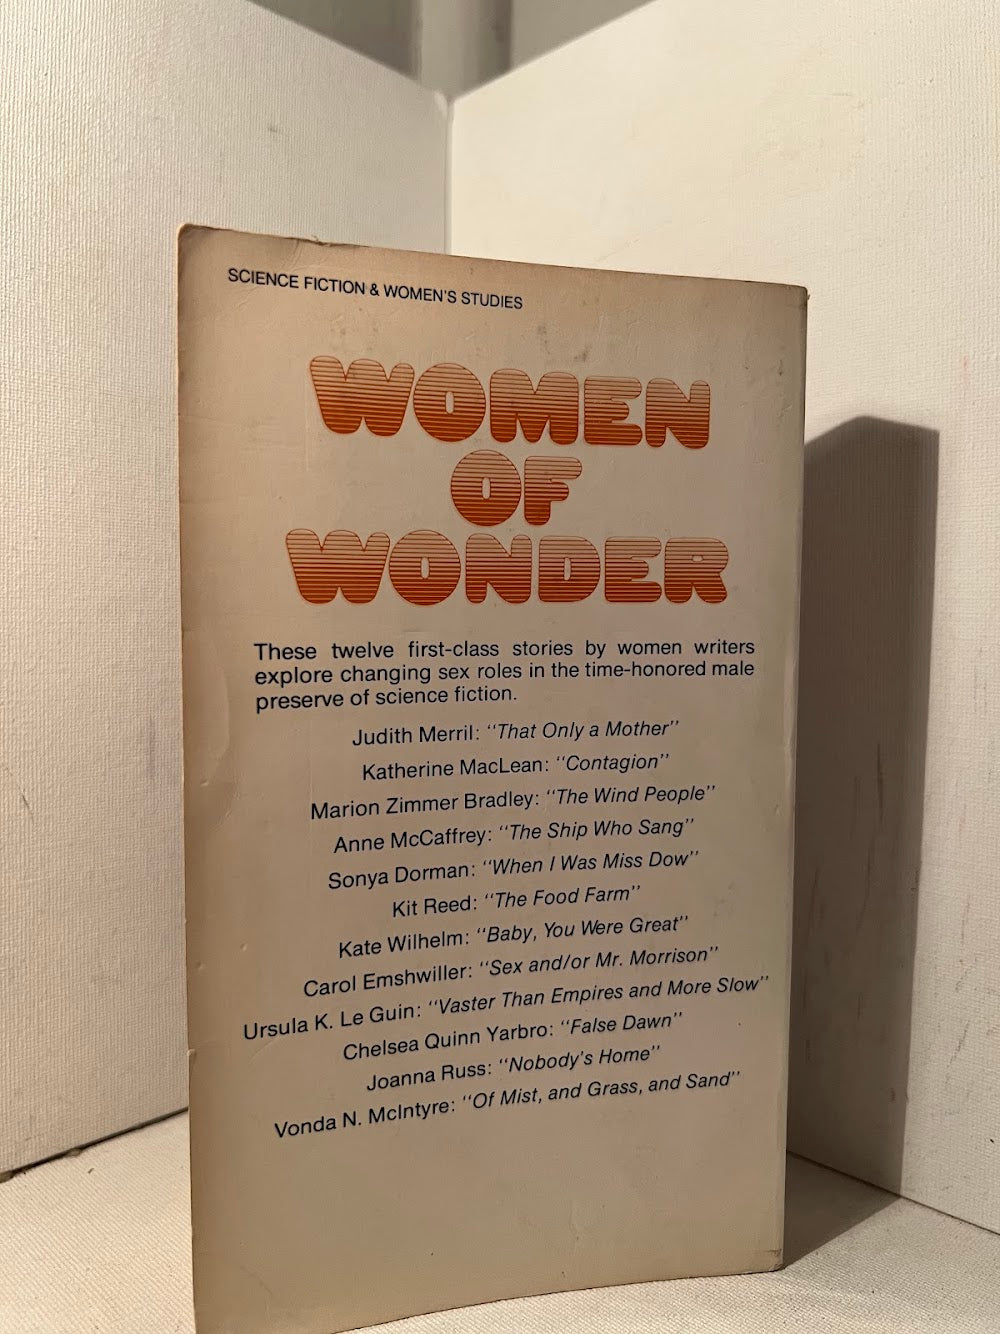 Women of Wonder - Science Fiction Stories by Women About Women